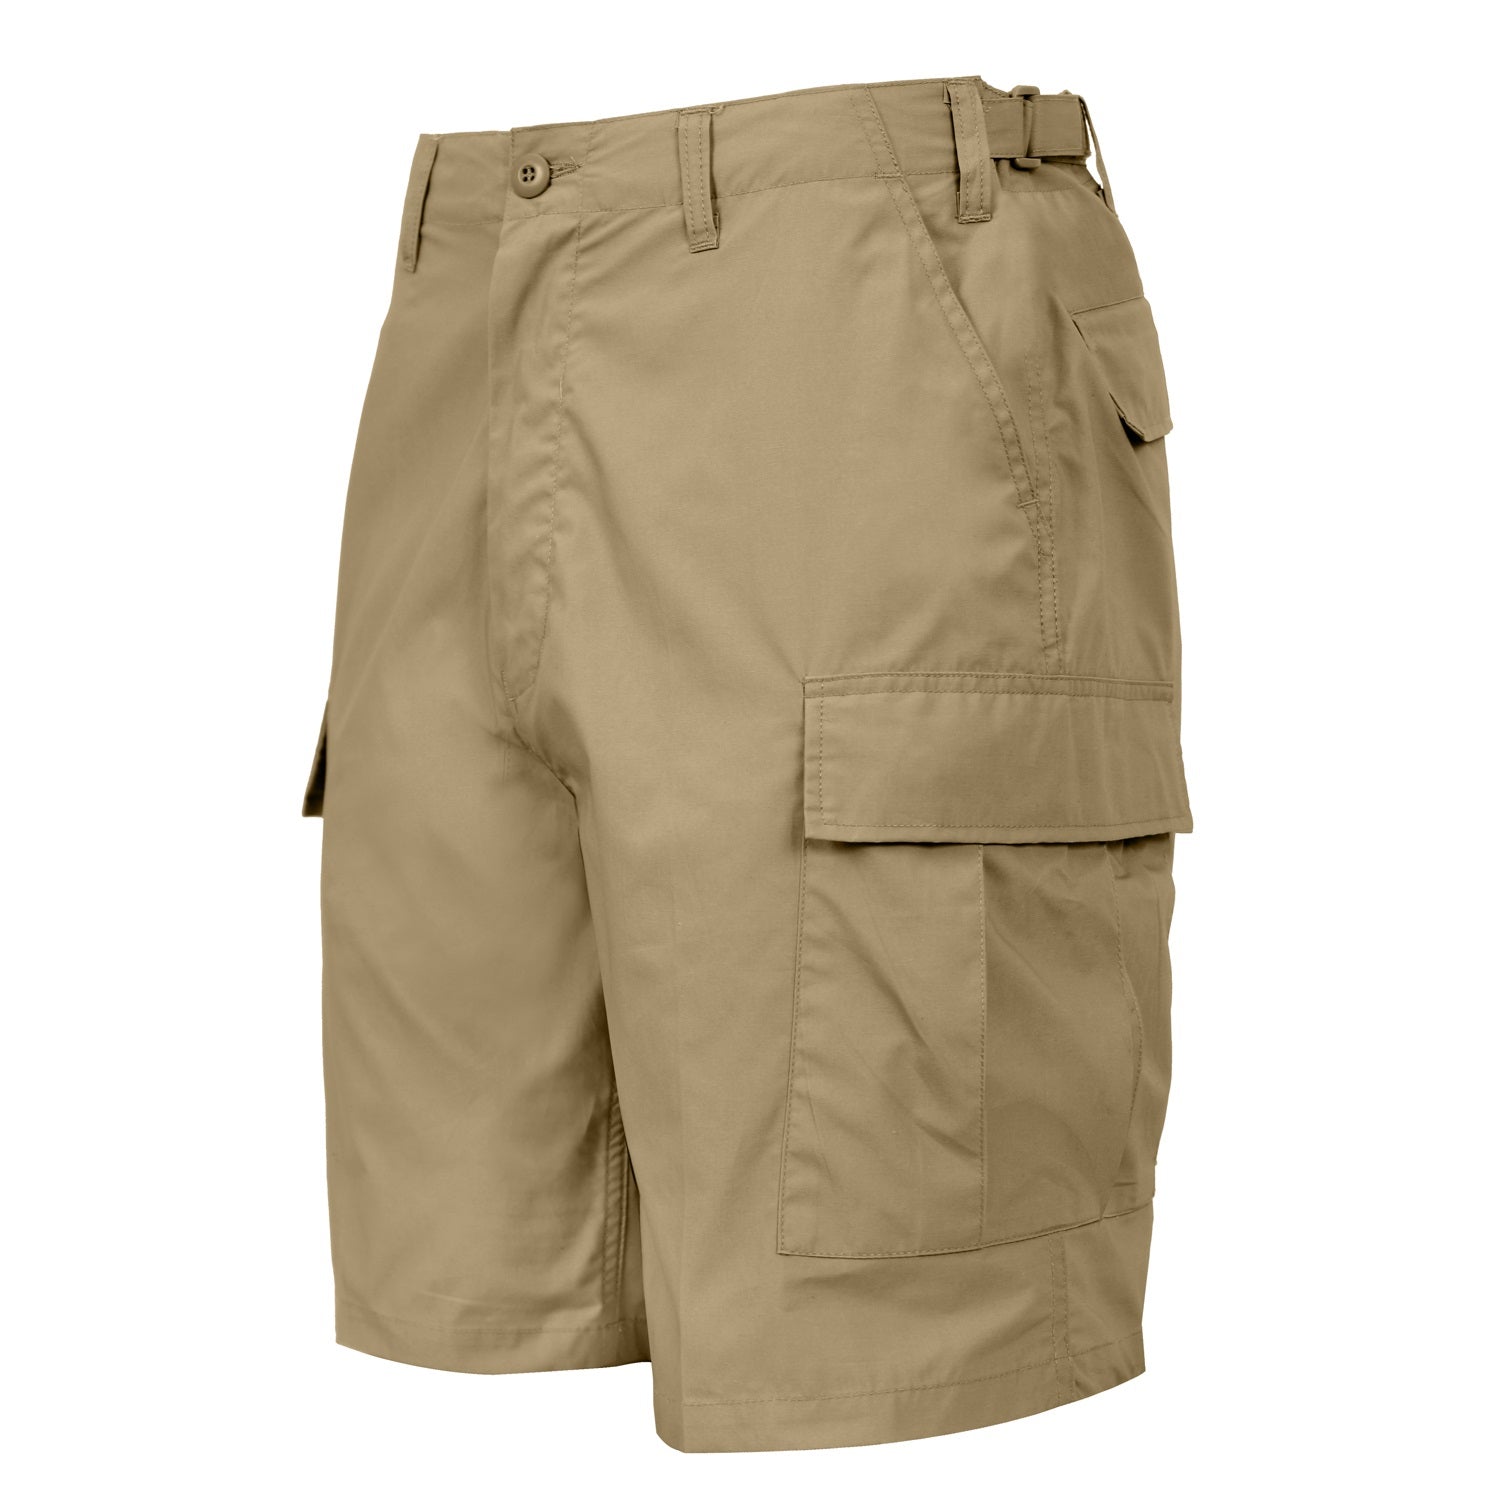 Rothco Lightweight Tactical BDU Shorts Khaki